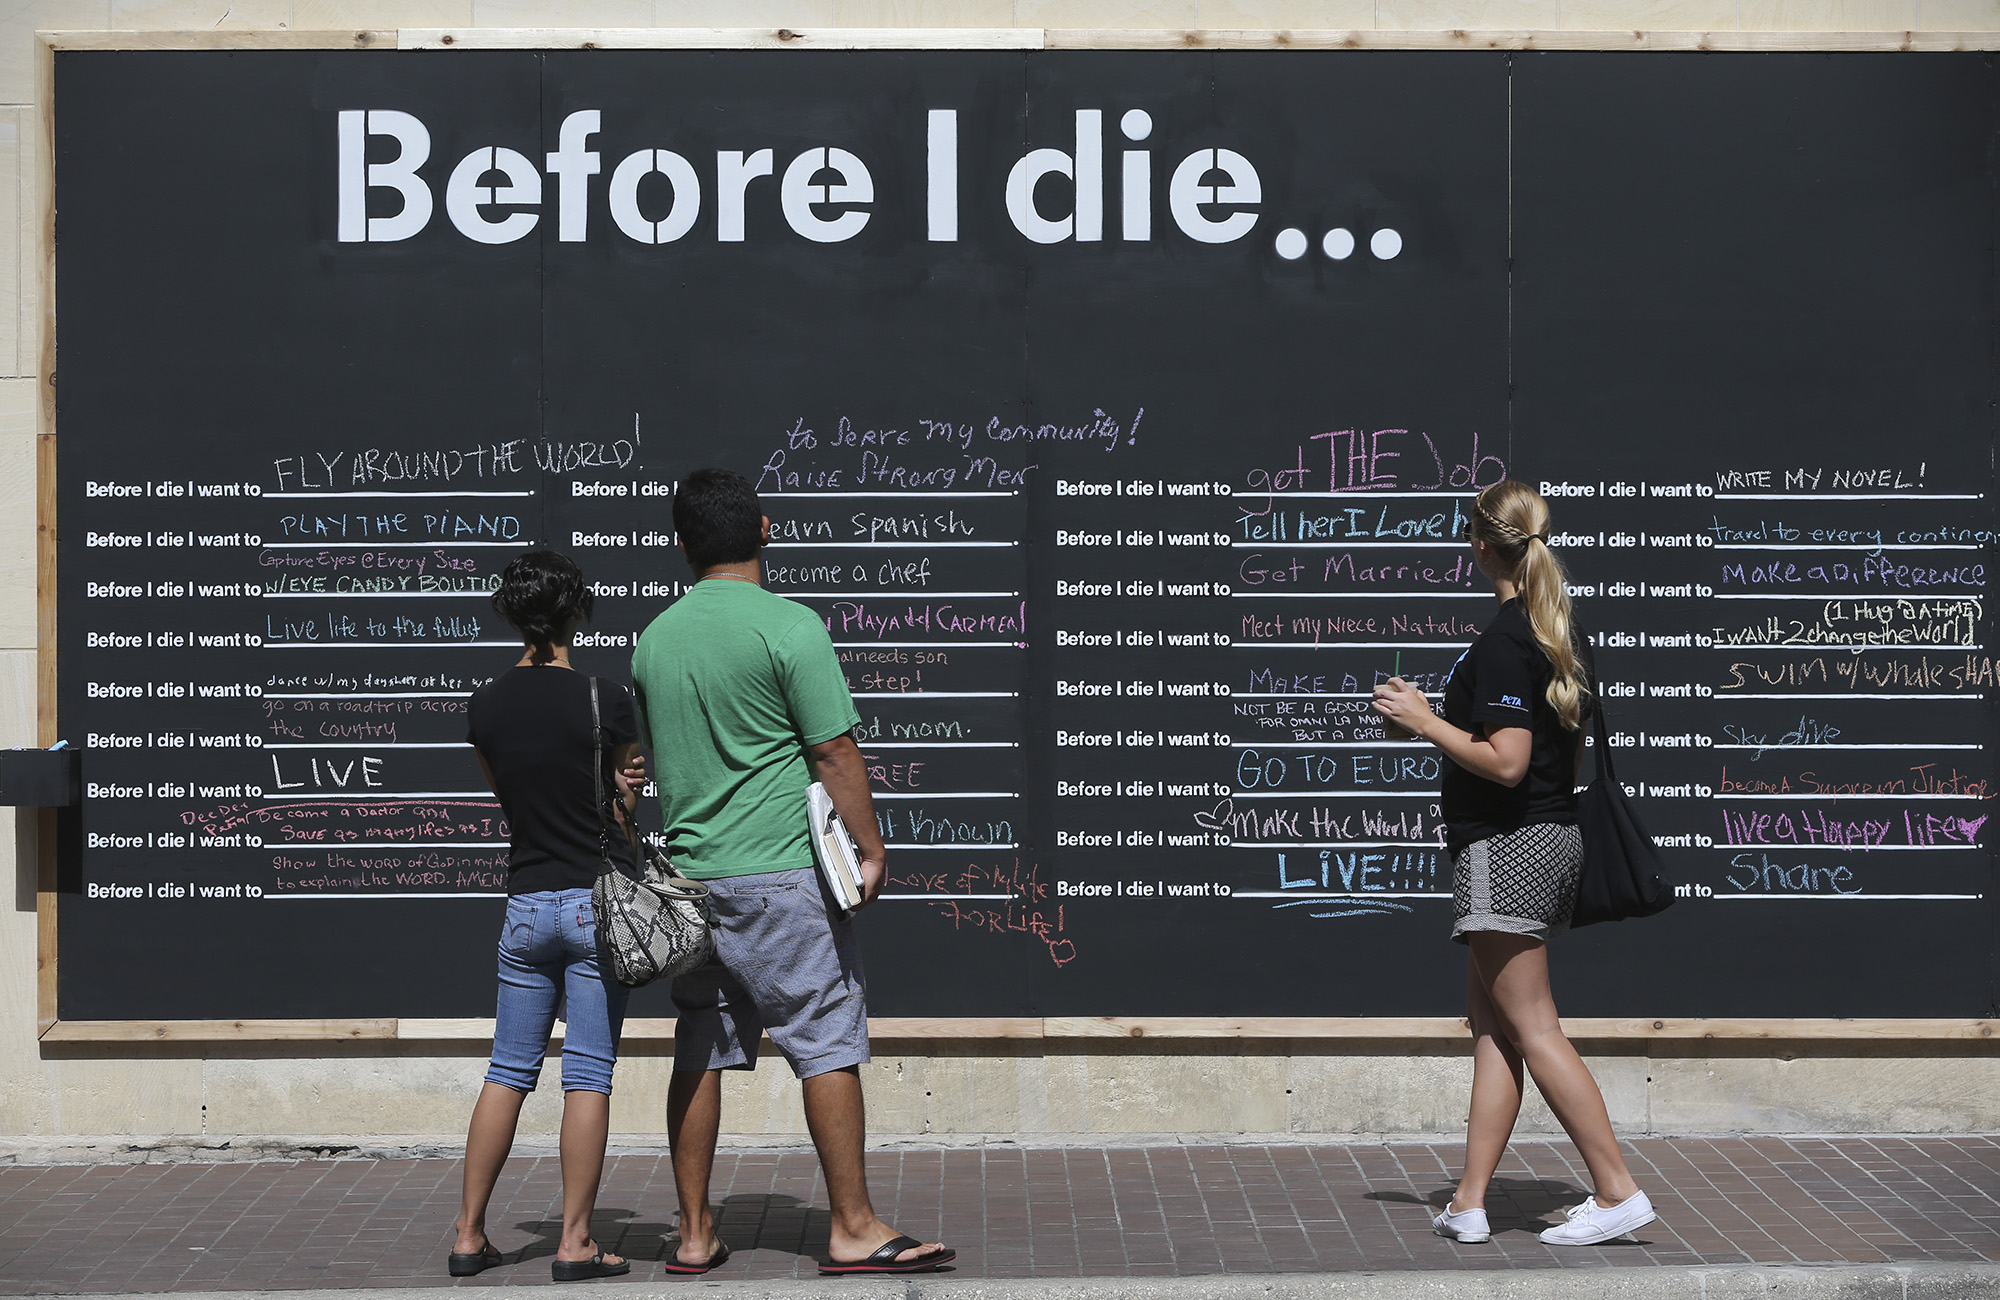 New before. Before i die фильм. Before i die текст. Before i die i want to. Before i die Art.